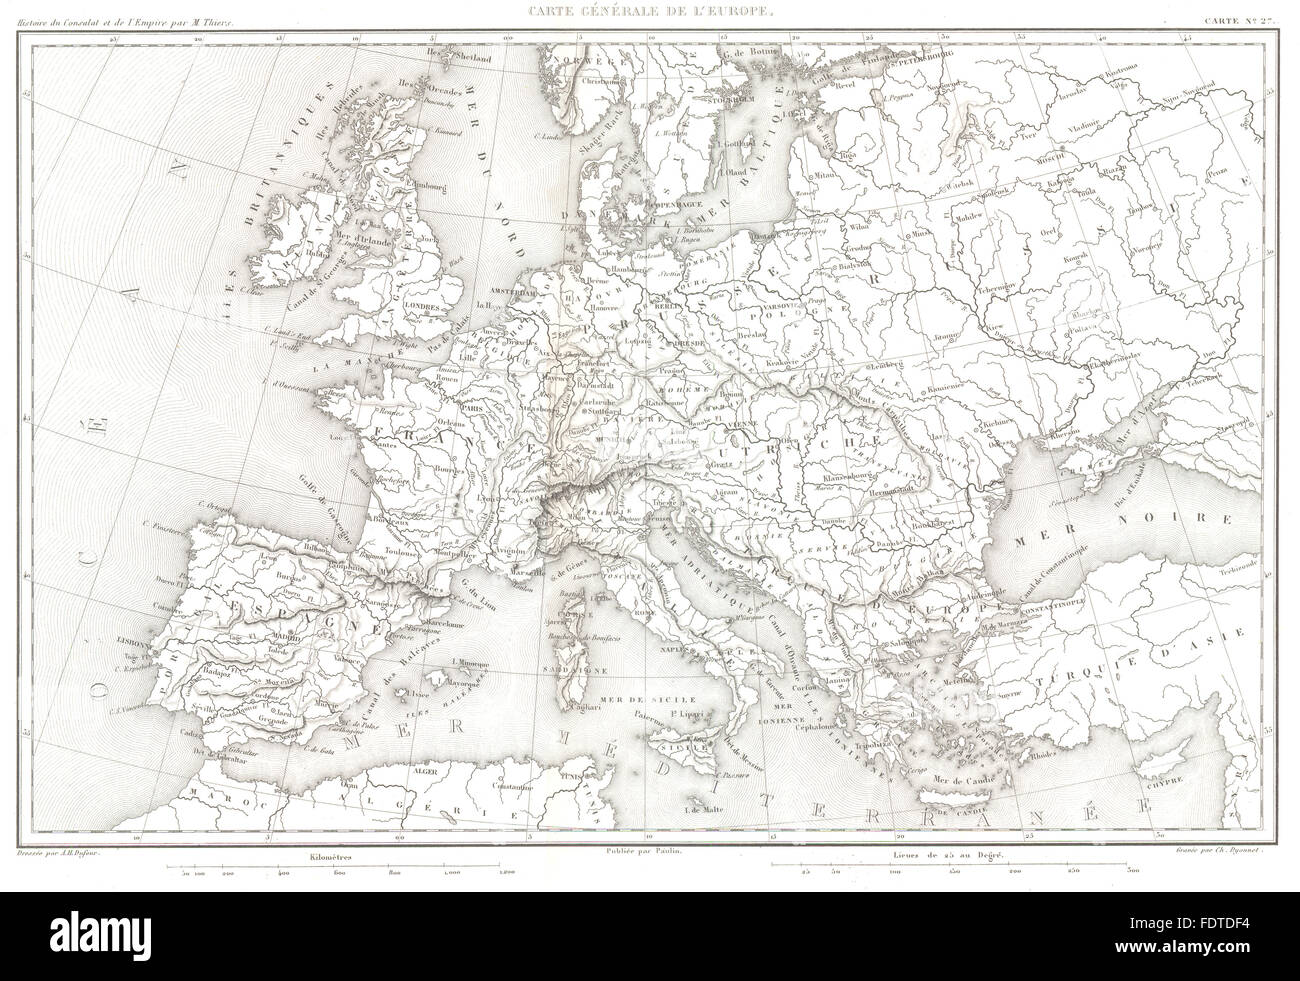 Europa: Carte Générale de L'Europe, 1859 Antike Landkarte Stockfoto